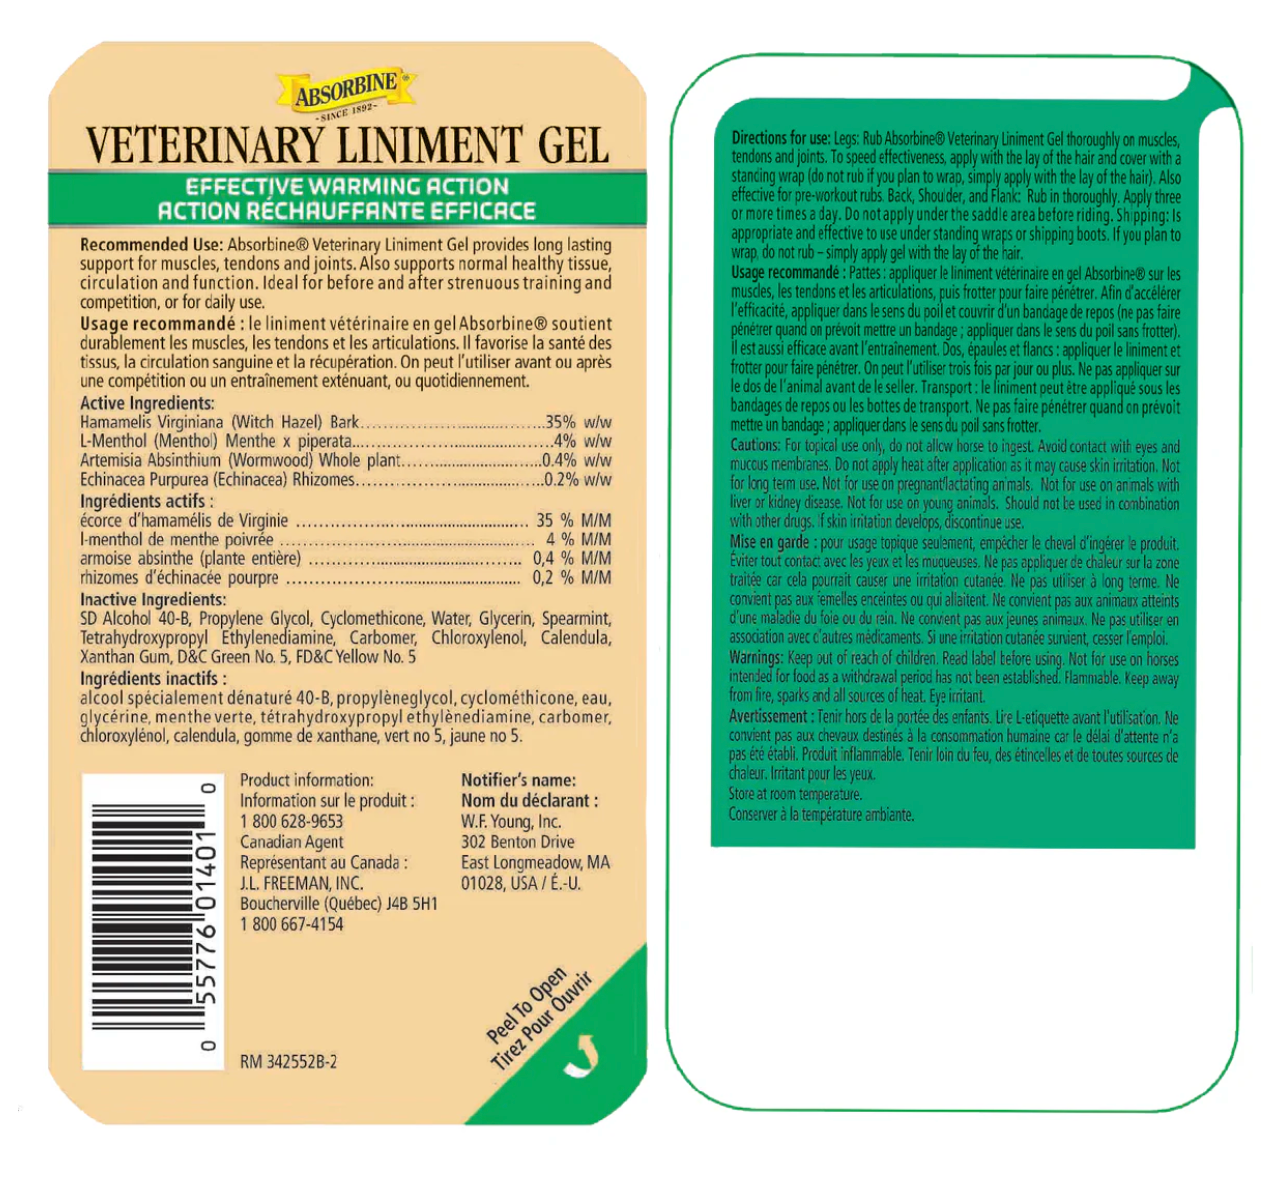 Veterinary Liniment Gel